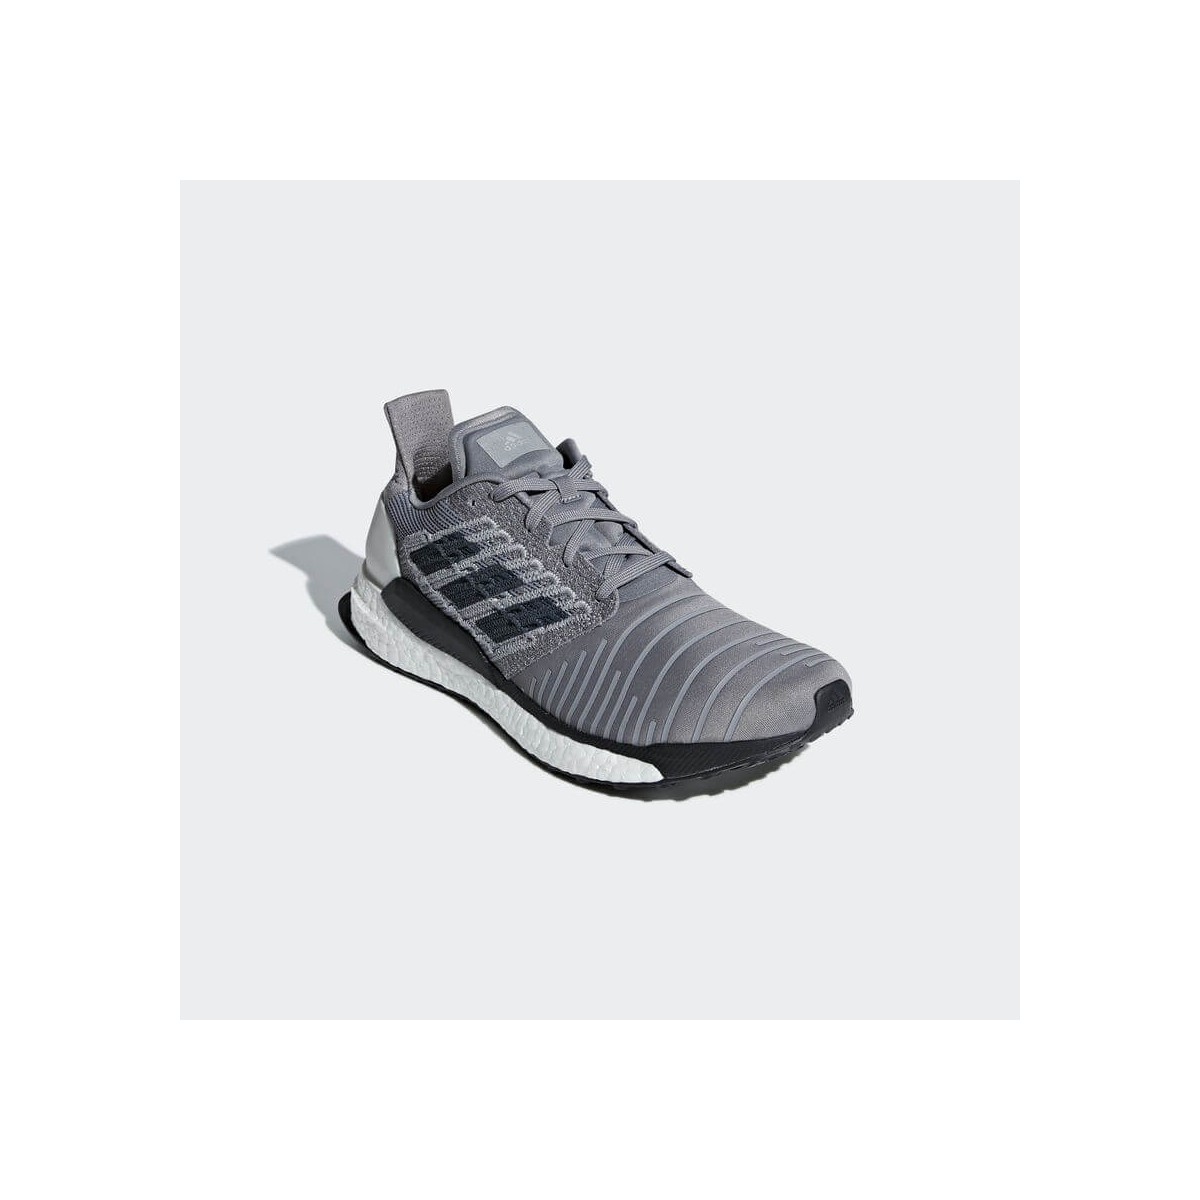 Coro Whitney Clavijas Adidas Solar Boost Running Shoes Gray Black White AW18